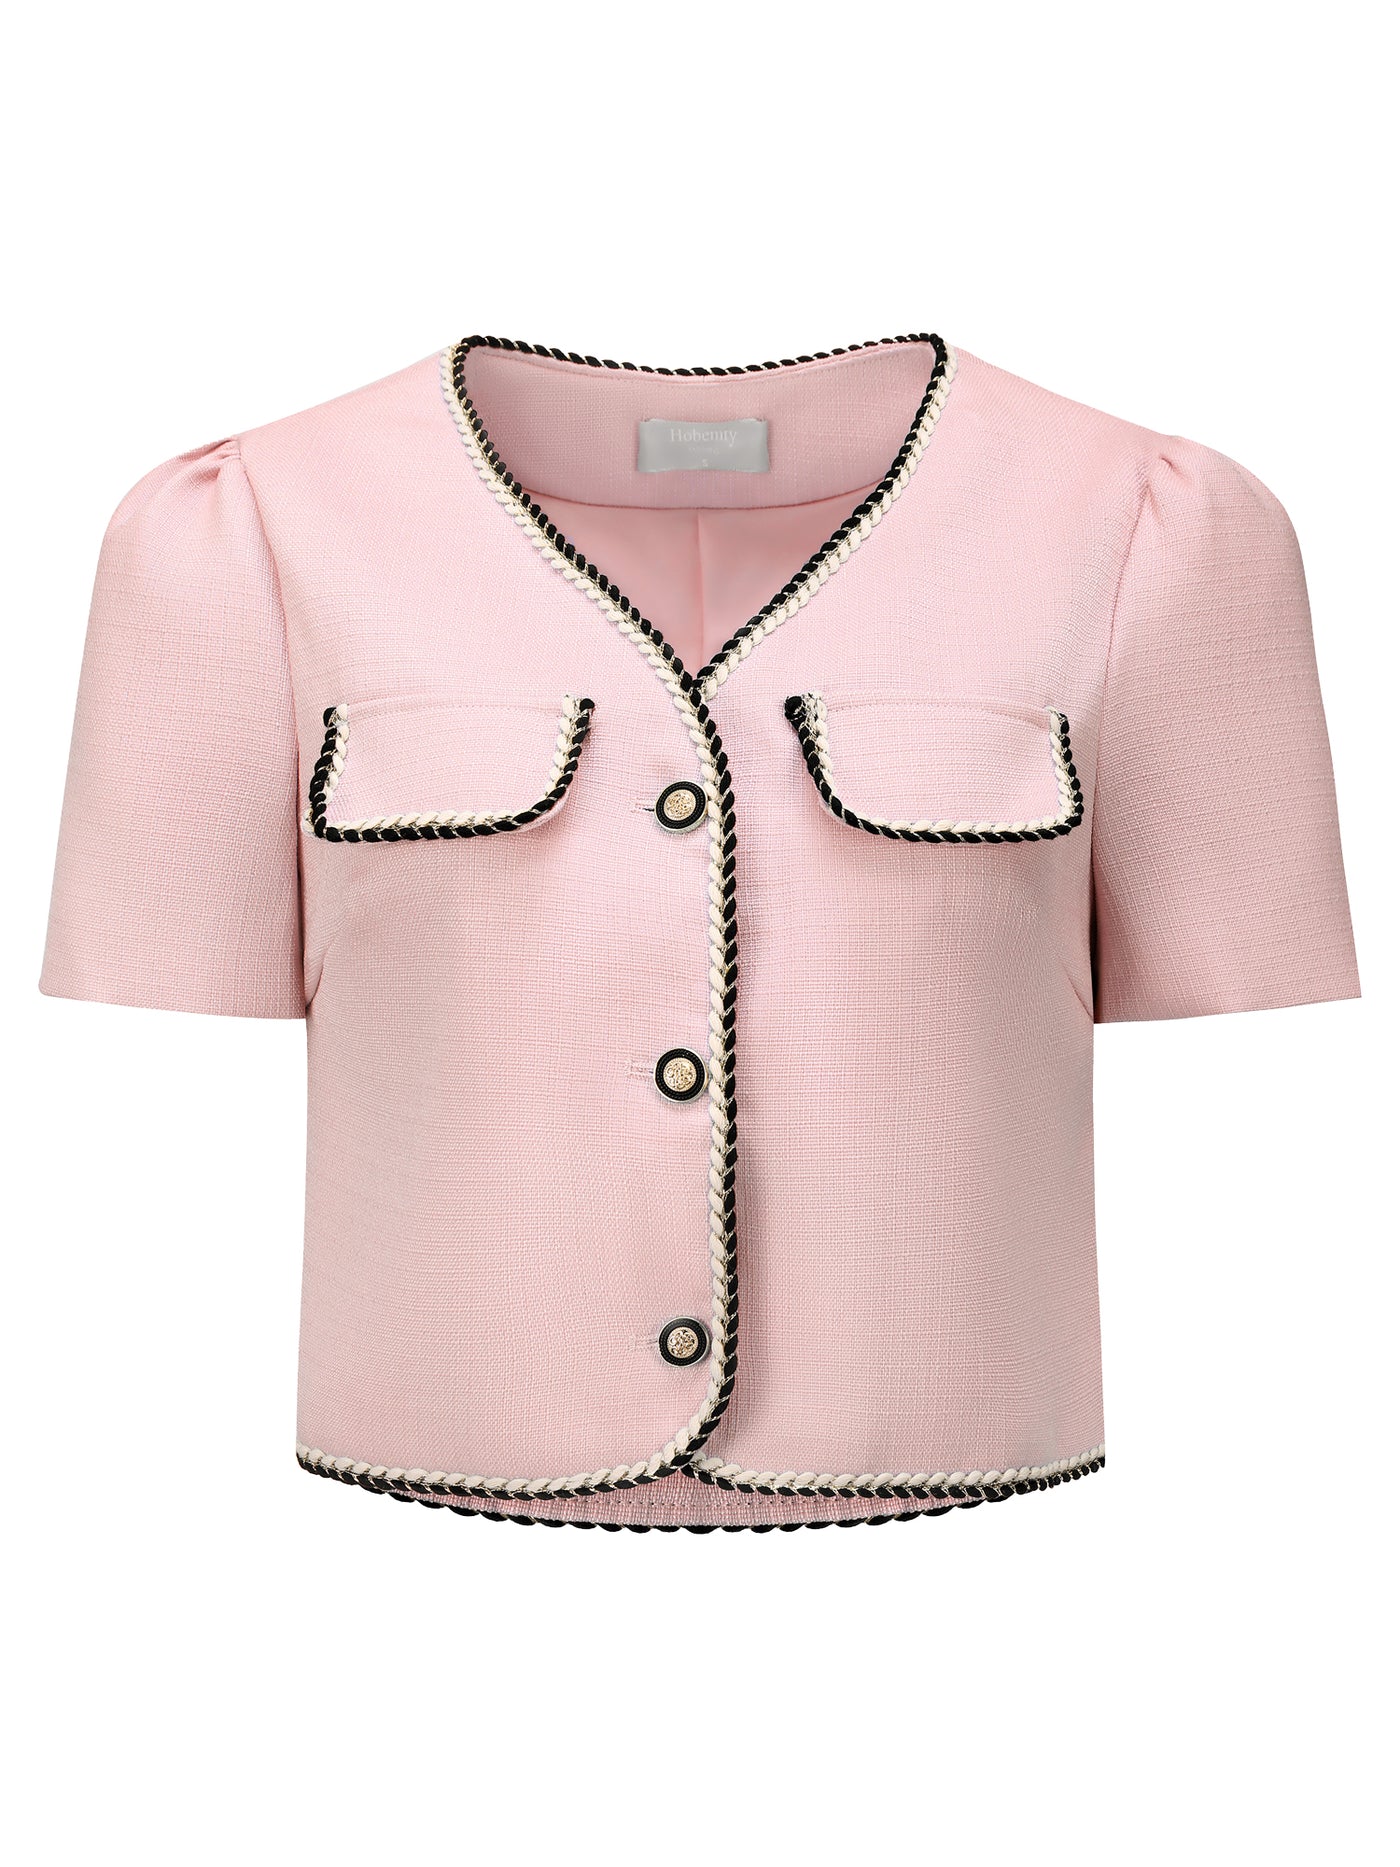 Bublédon Women's Tweed Jacket Contrast Color Button Down Short Sleeve Work Office Blazer